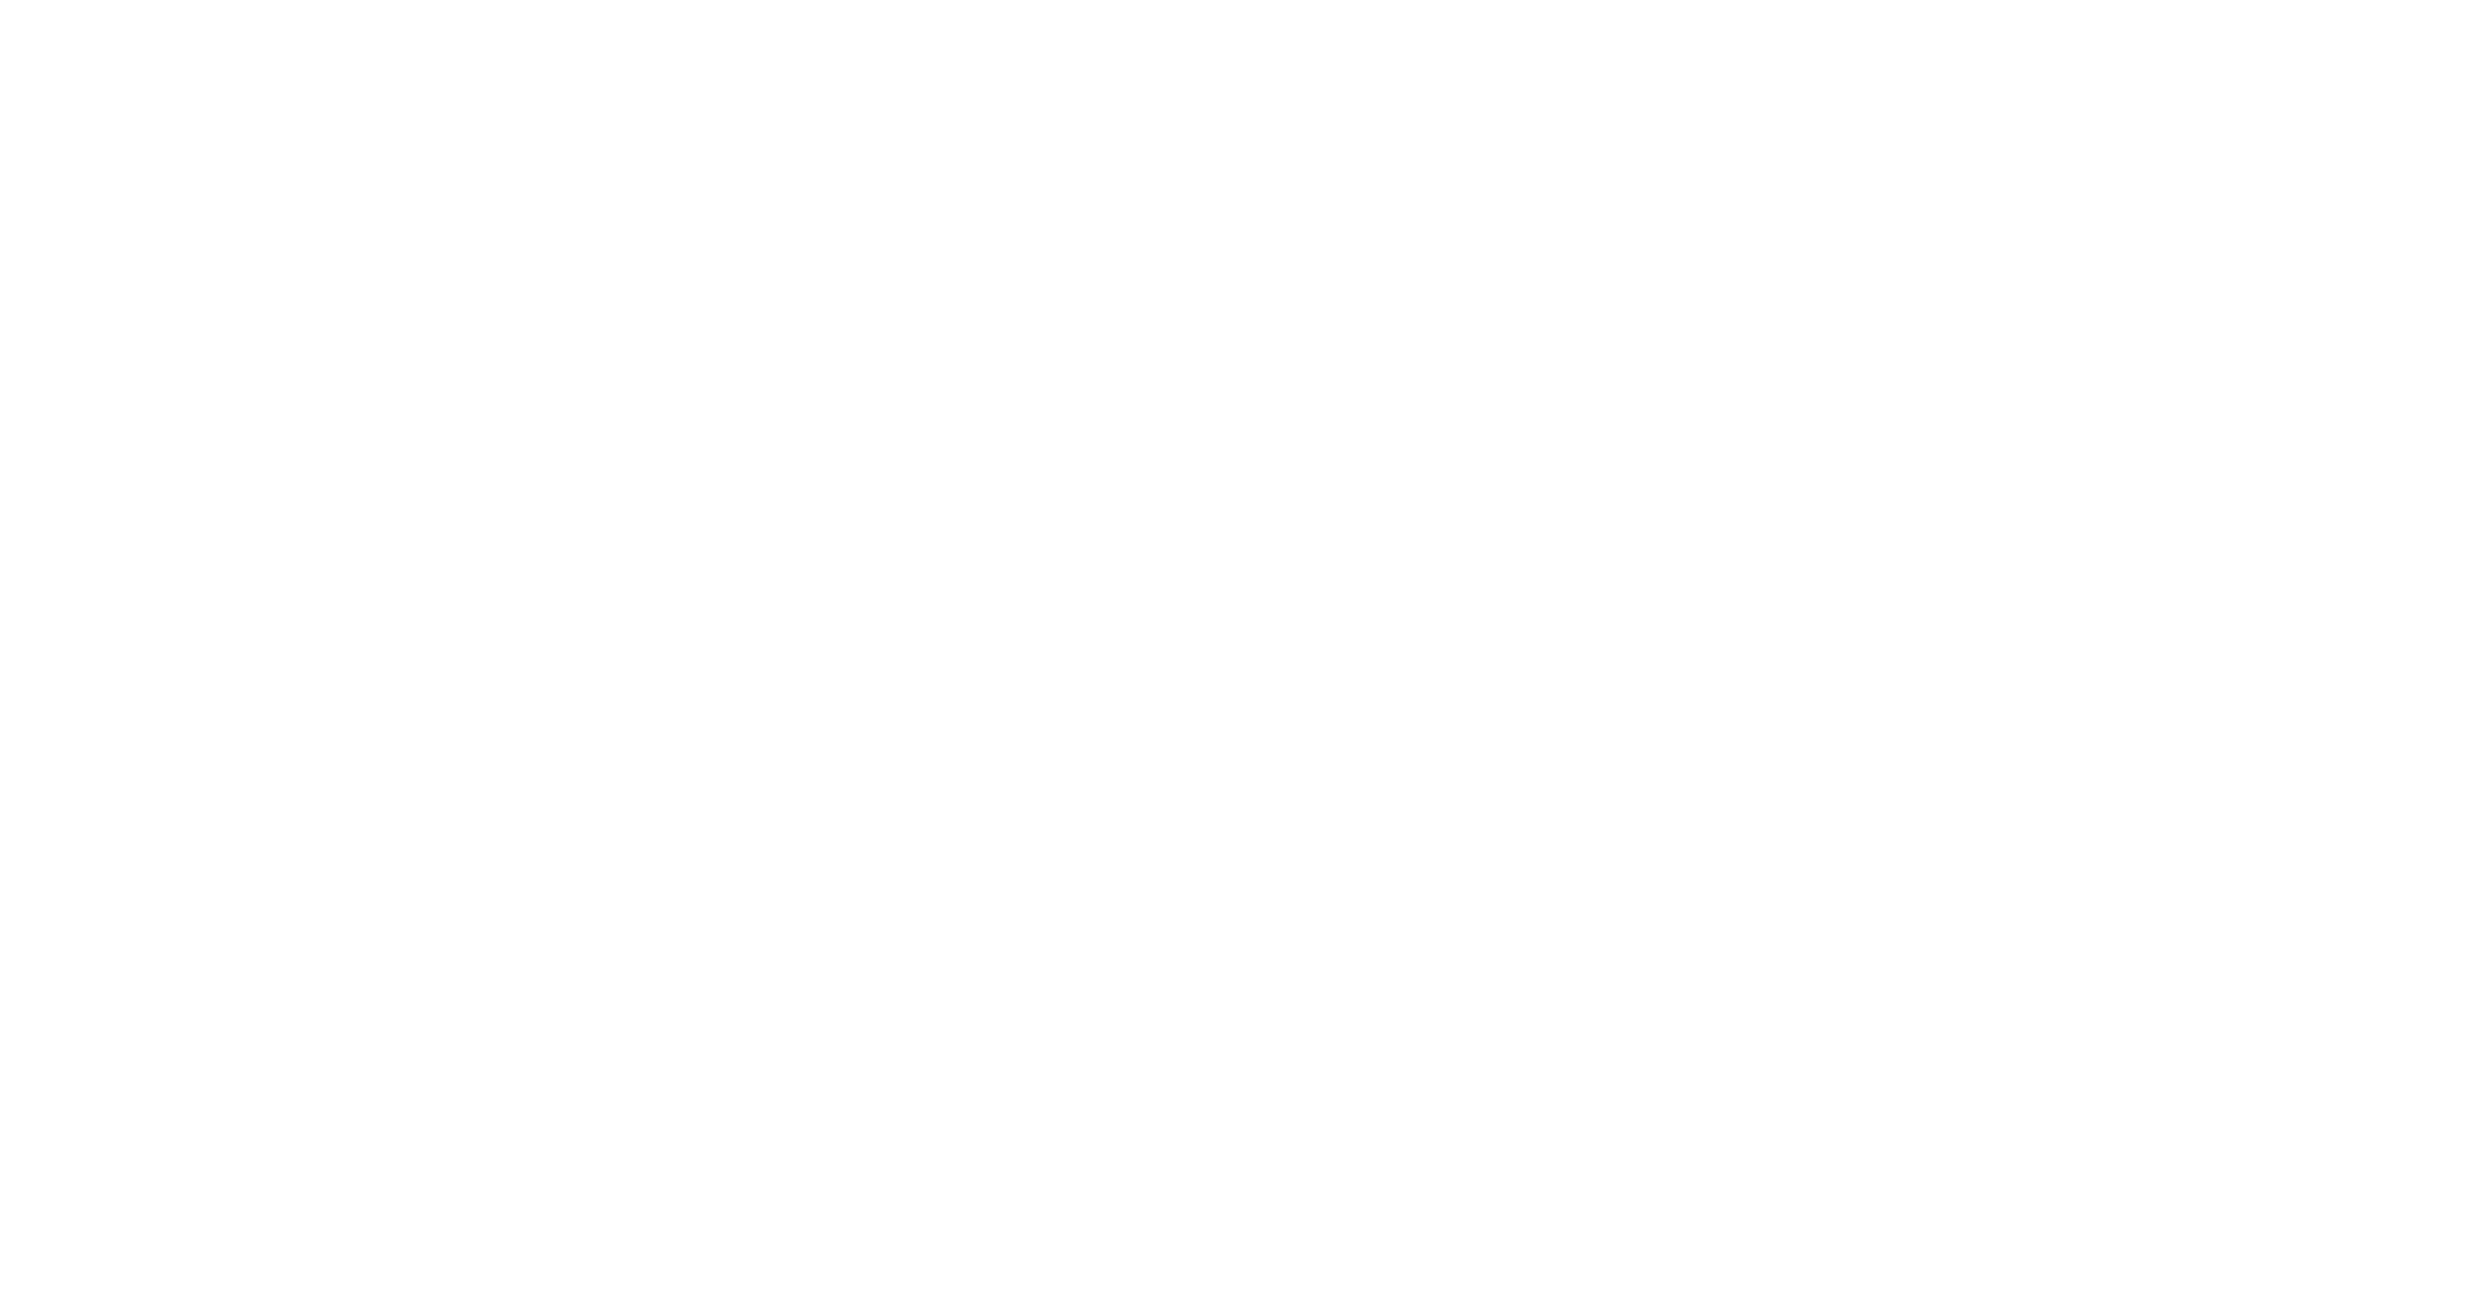 Pixie Hollow Games logo